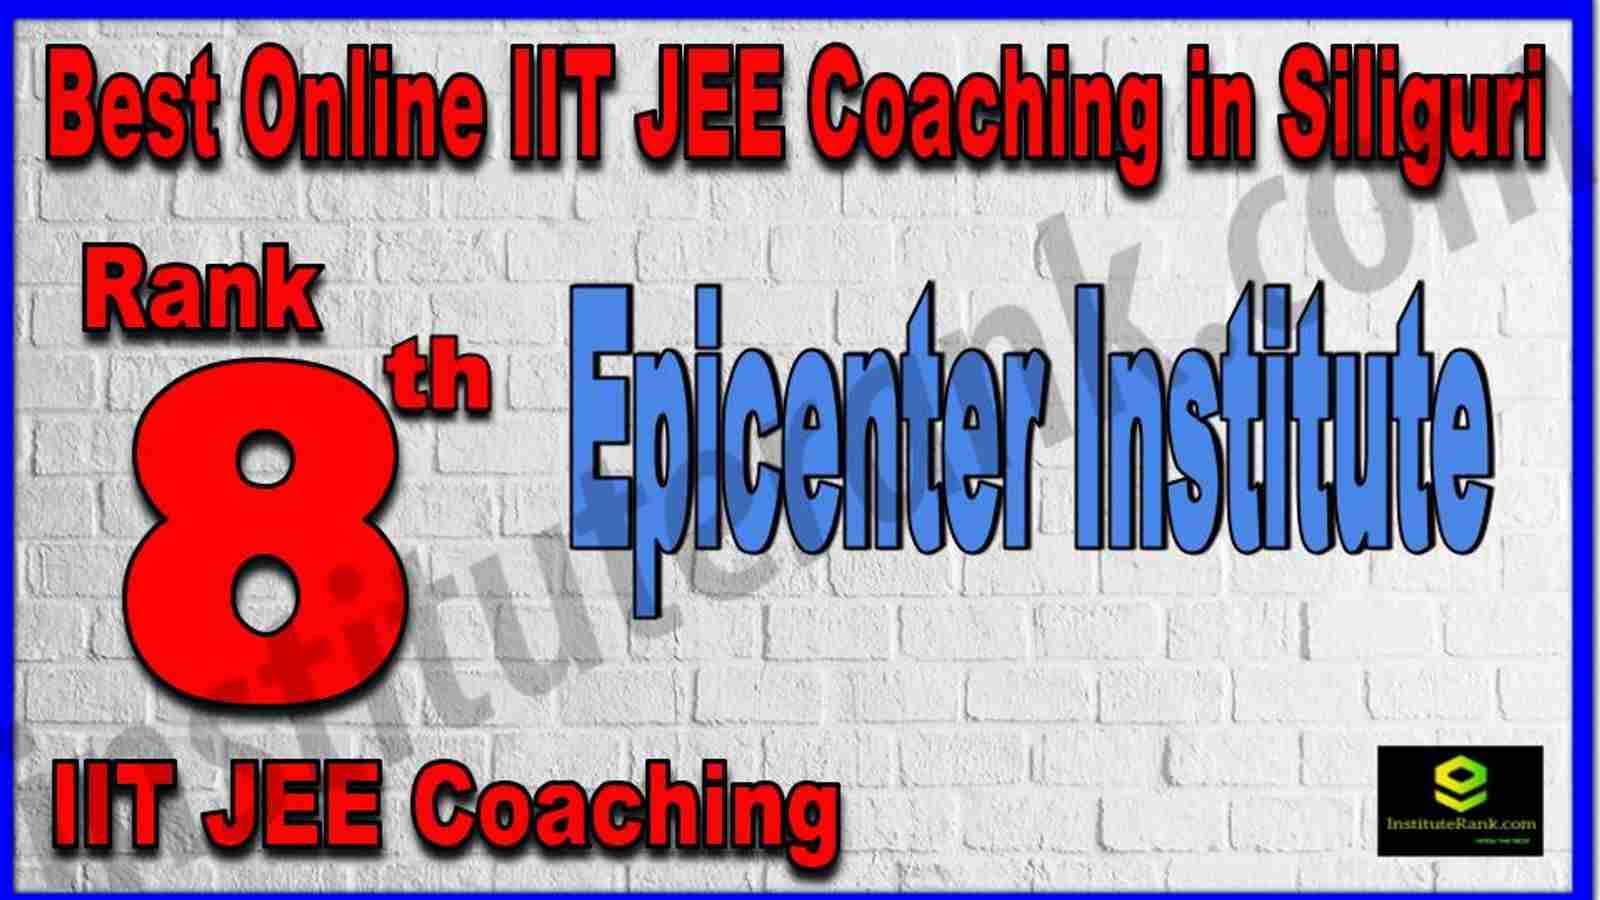 Rank 8th Best Online IIT-JEE Coaching in Siliguri